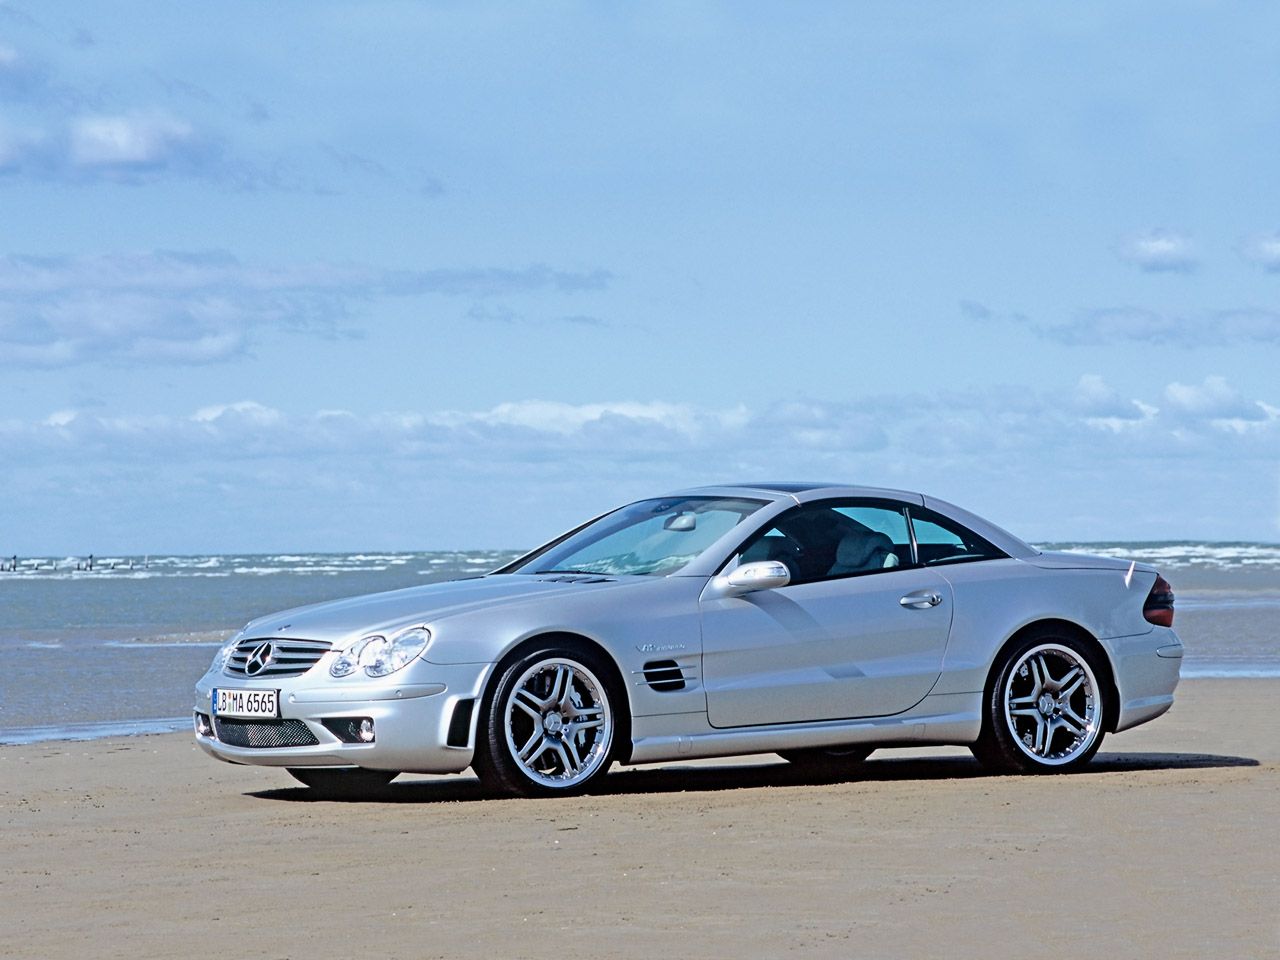 2004-Mercedes-Benz-SL-65-AMG-SA-Shore-1280x960.jpg